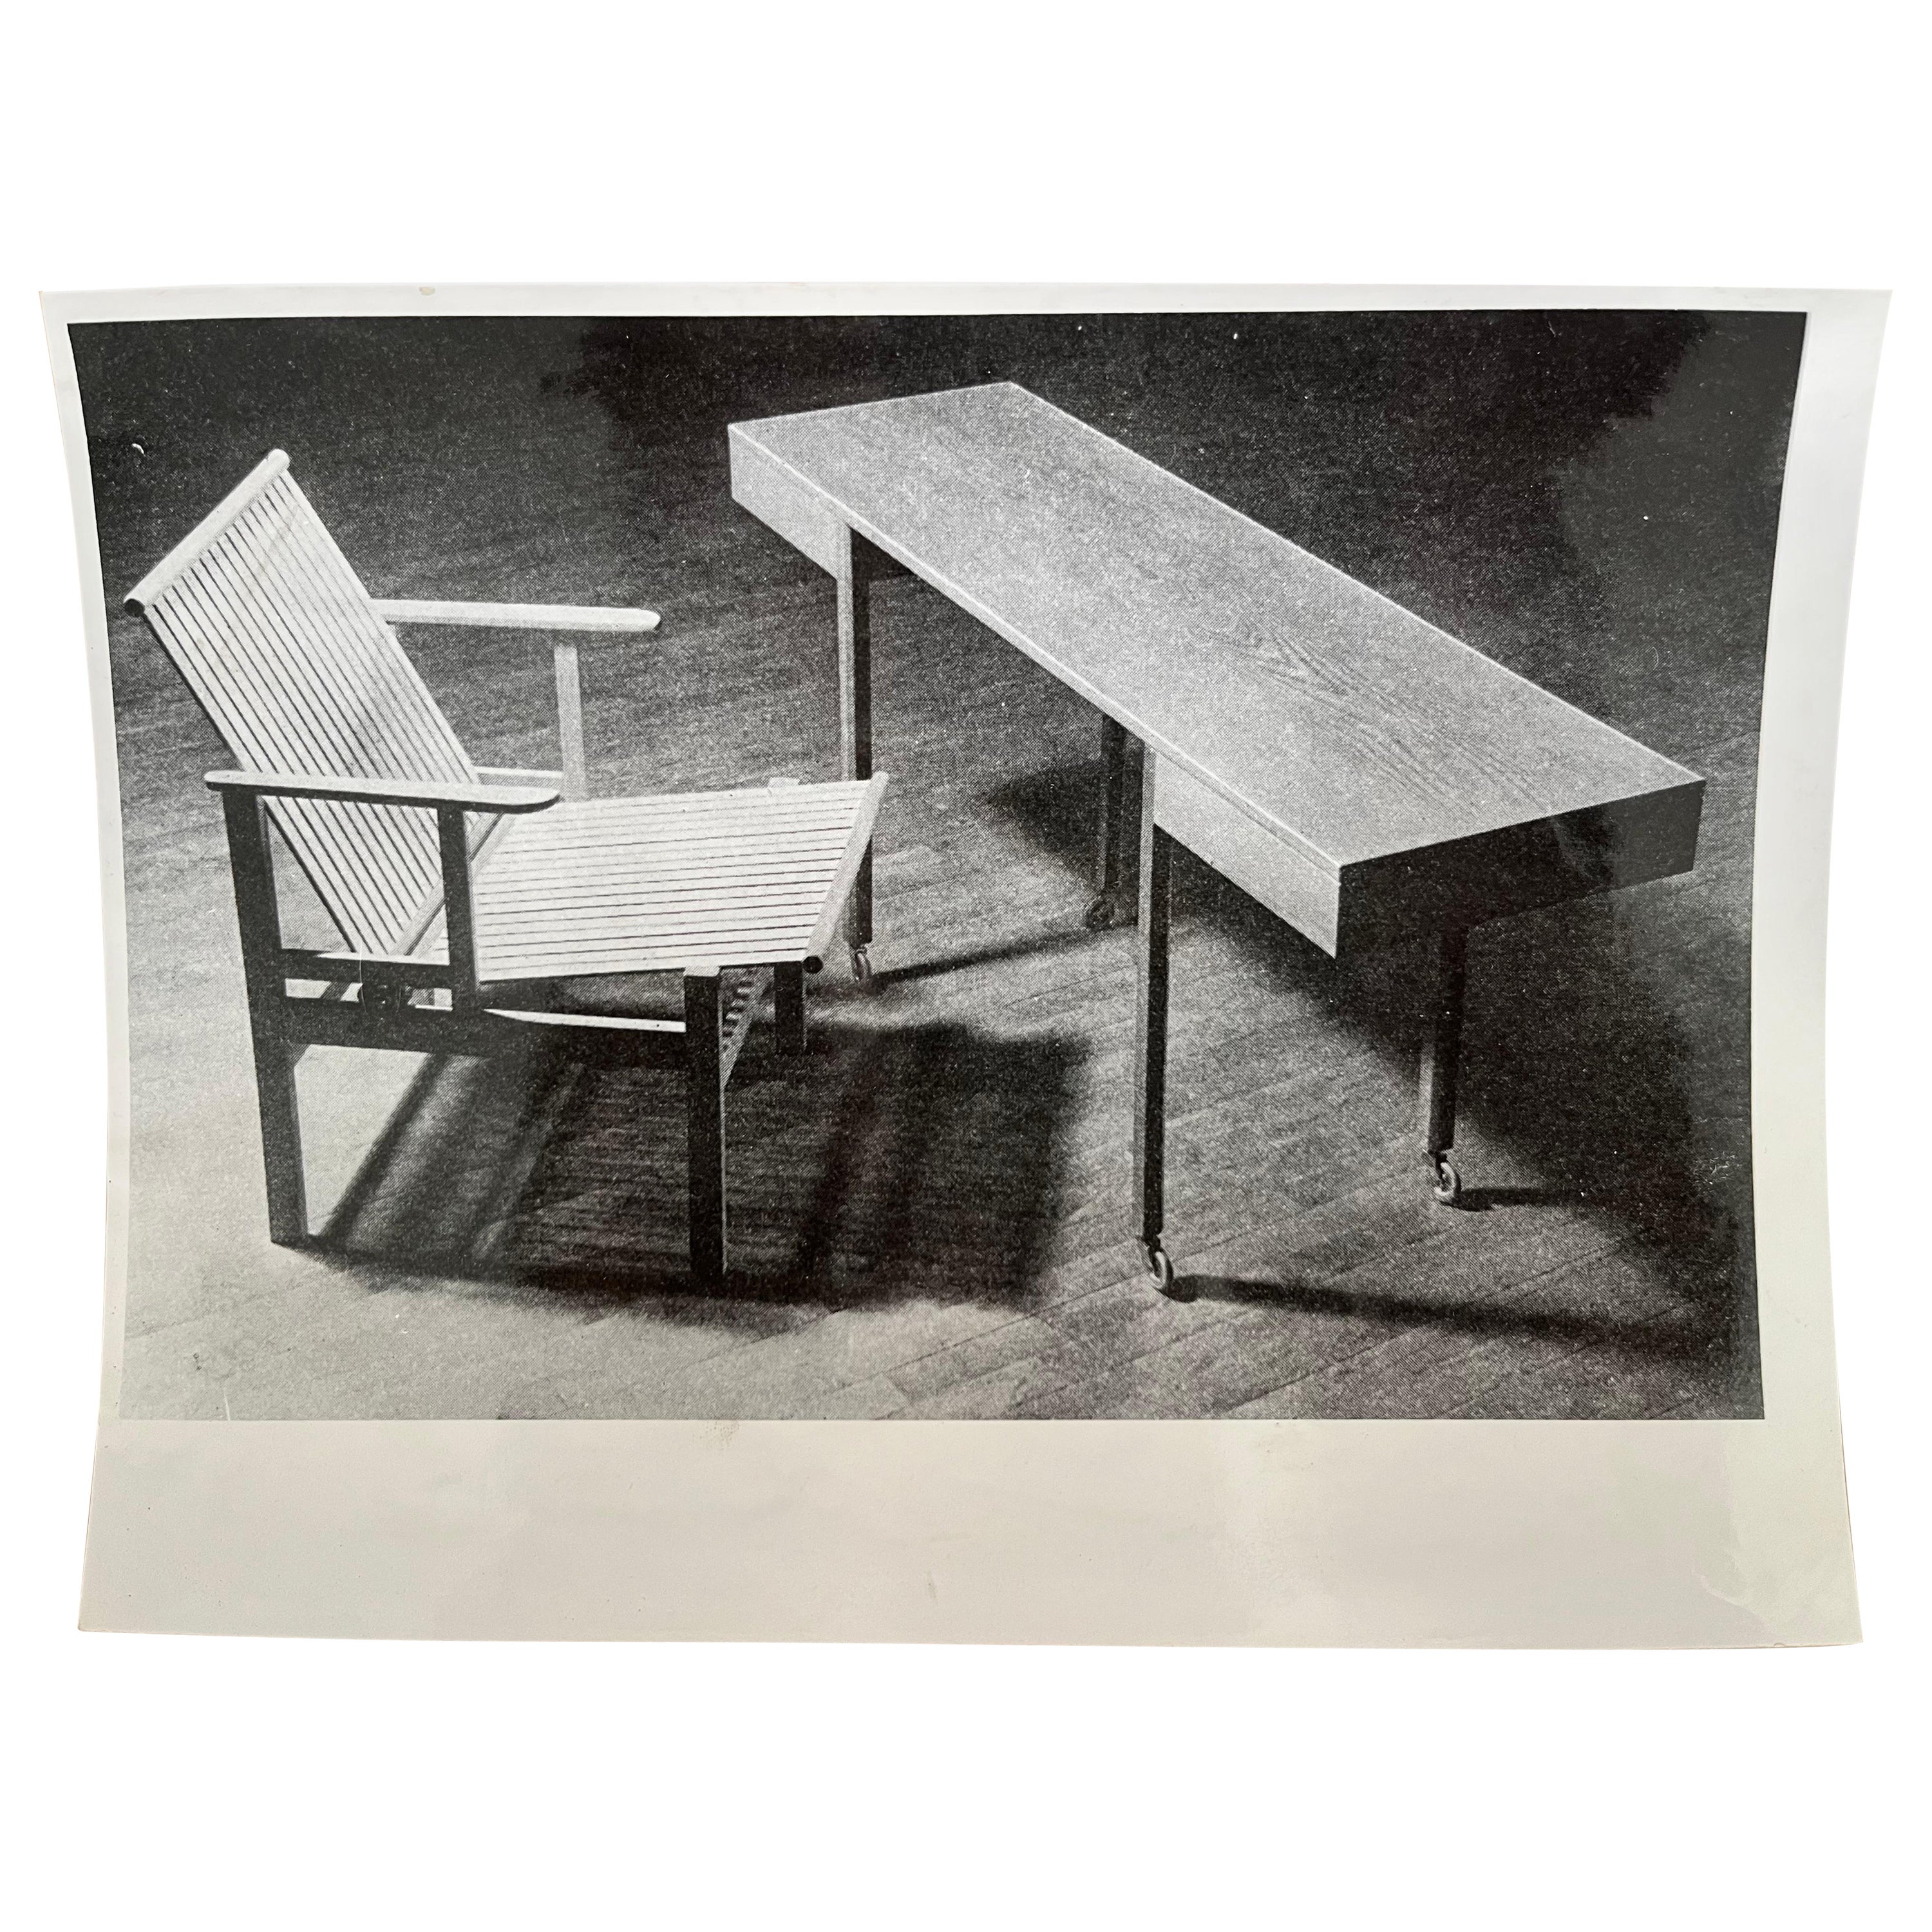 Original Photo of Furniture by Karl Erik Ekselius / Sweden, 1952